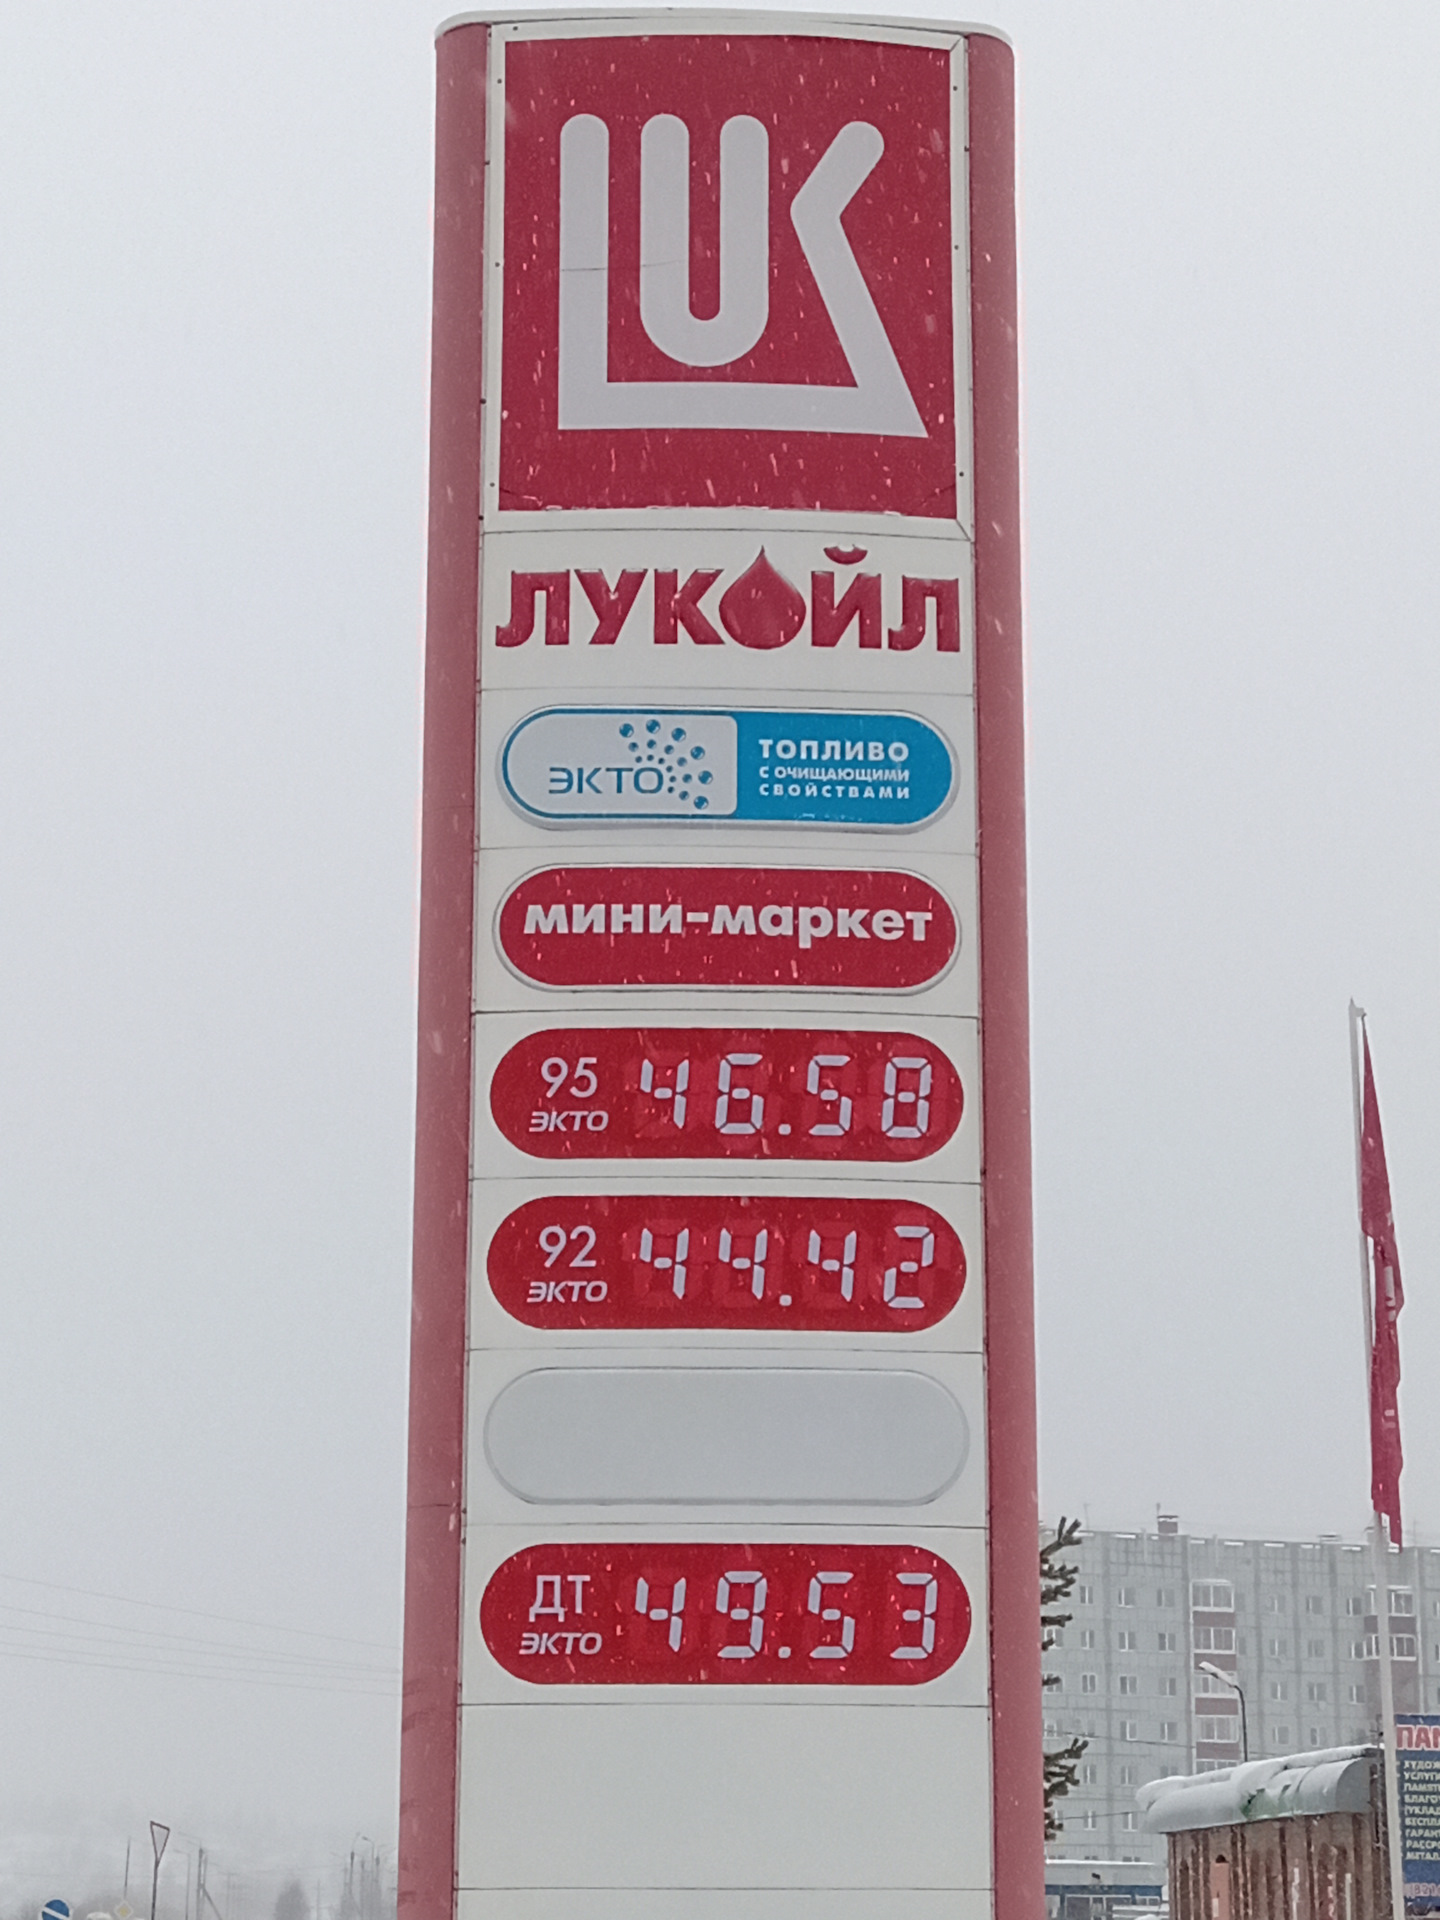 Цена бензина в 95 году